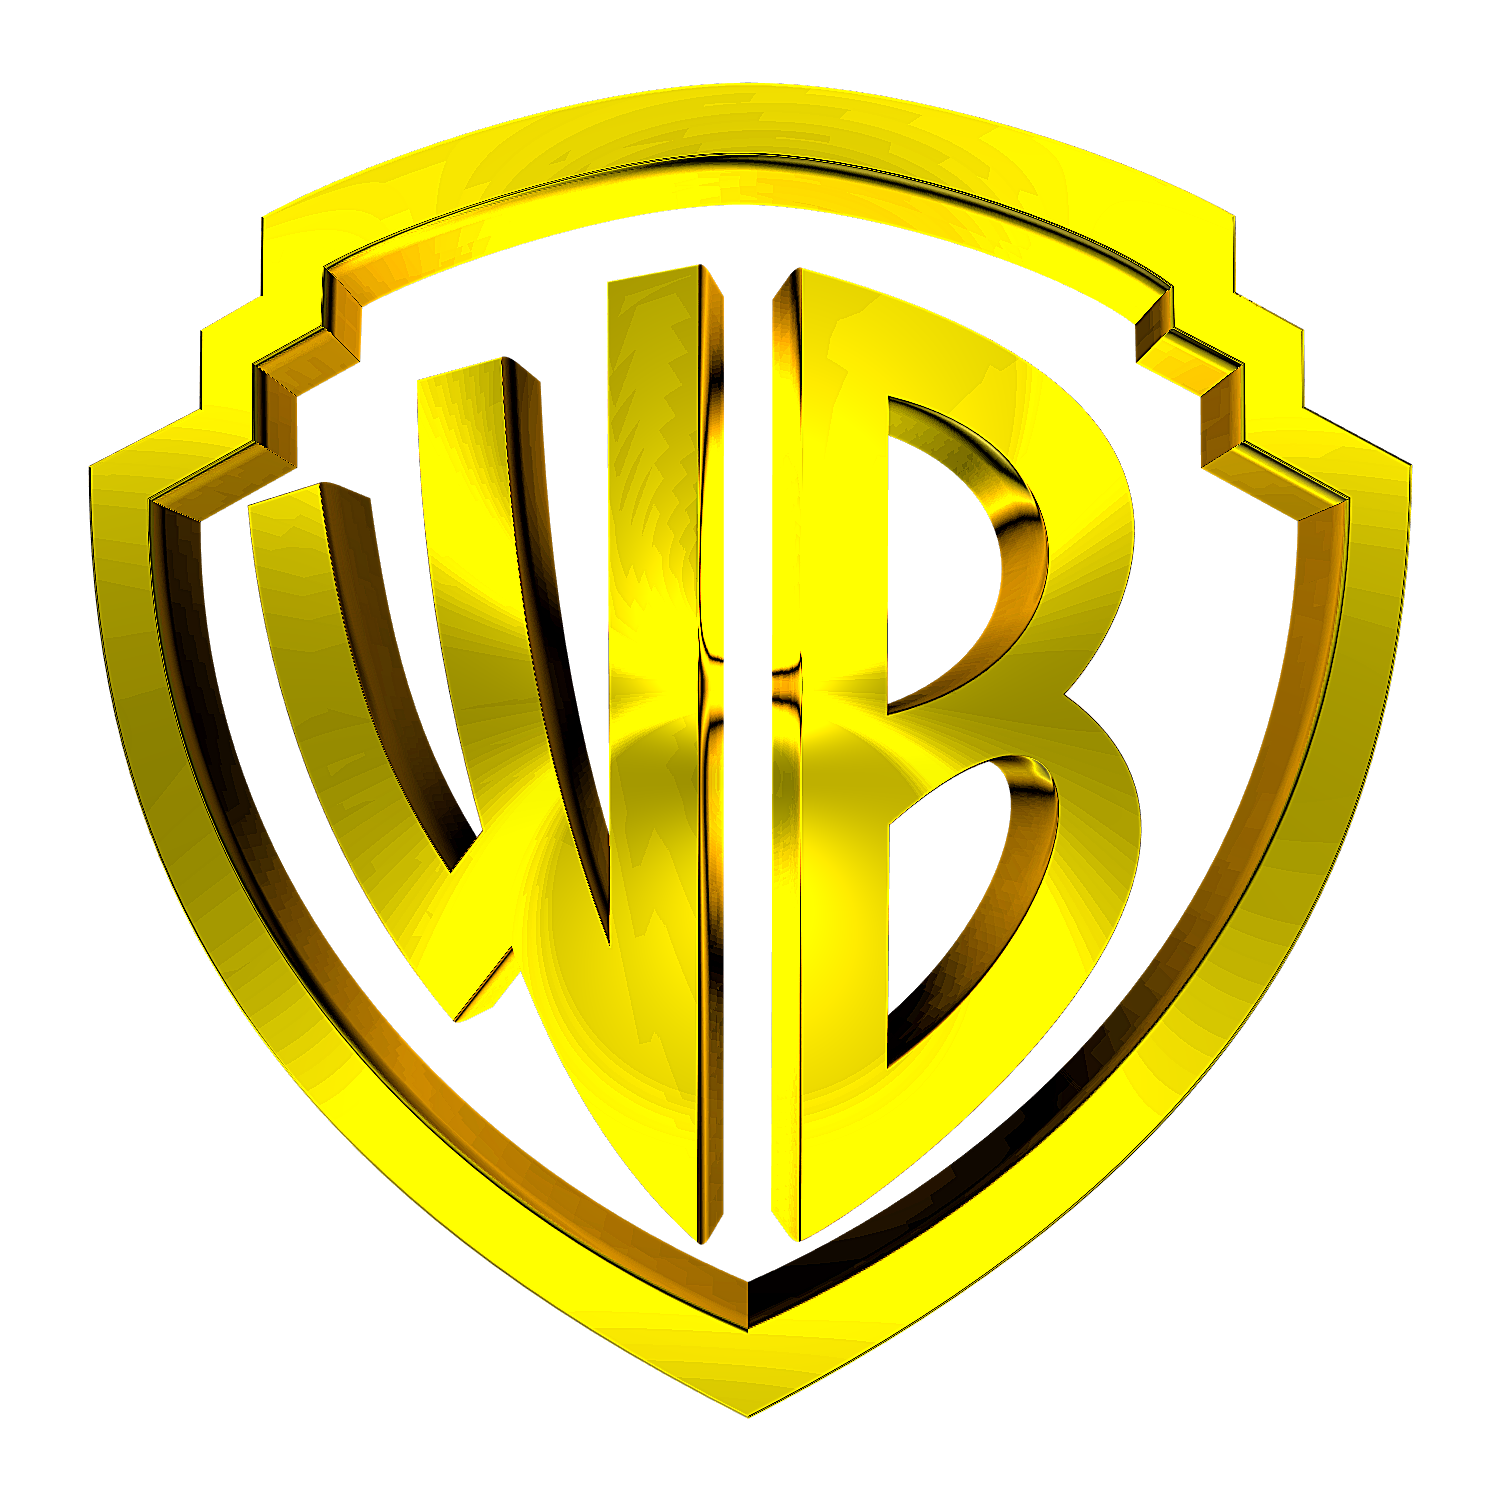 Варнер фф. Уорнер БРОС. Логотип ворнер БРОС. Эмблема WB ворнер бразерс. Кинокомпания Warner brothers.